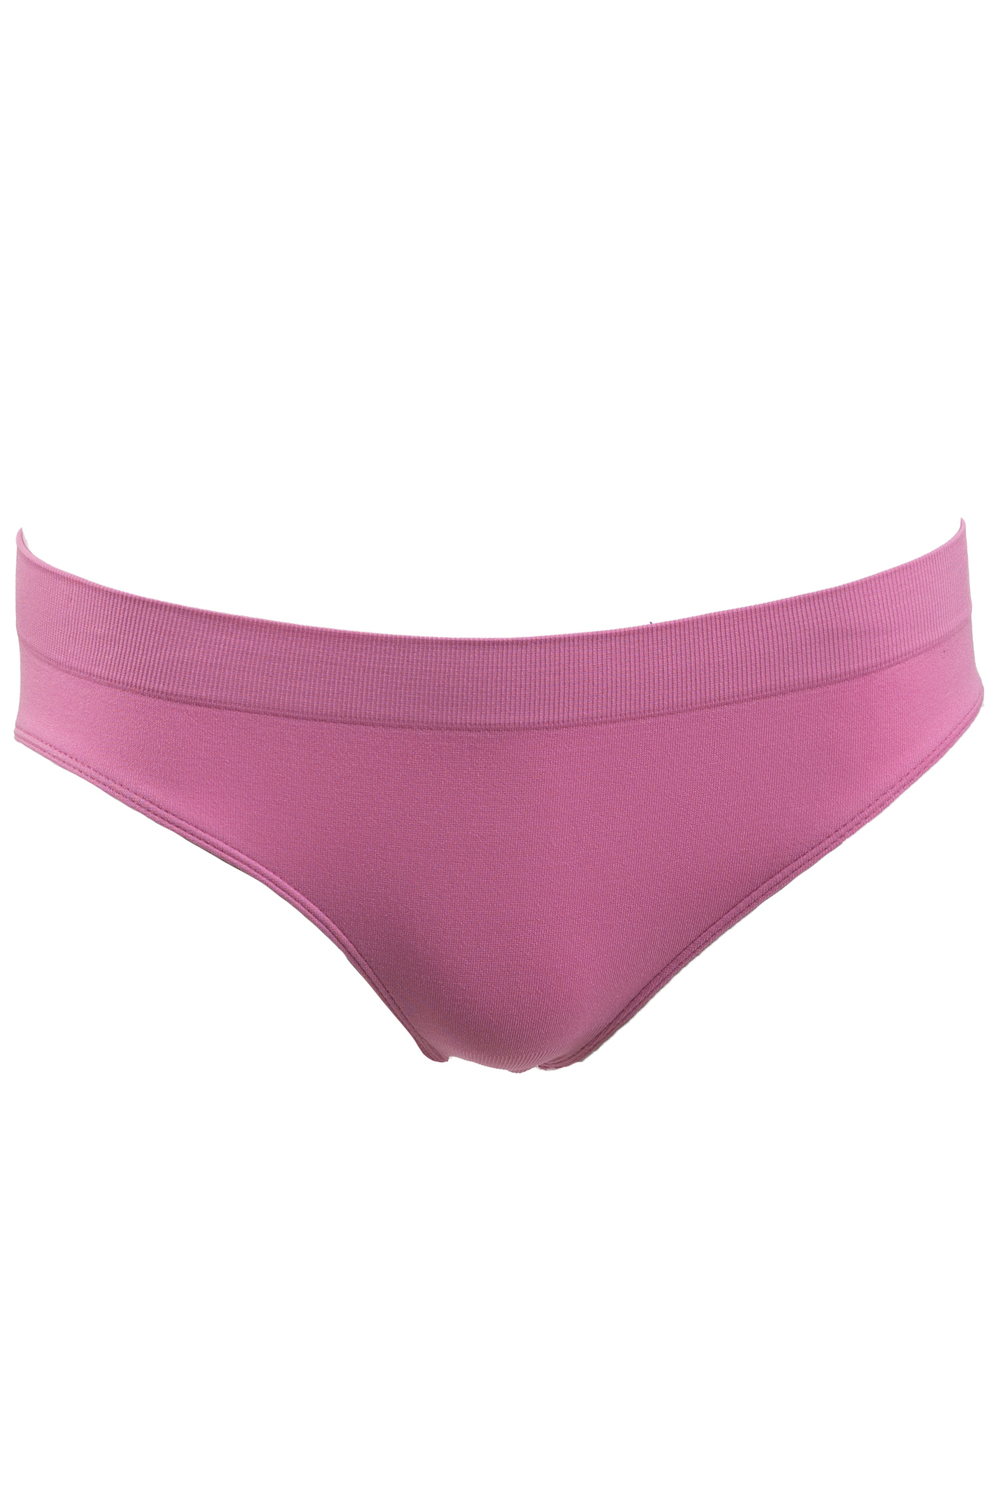 Set of 3 seamless high-cut panties - Charcoal, pink & black. Size: m